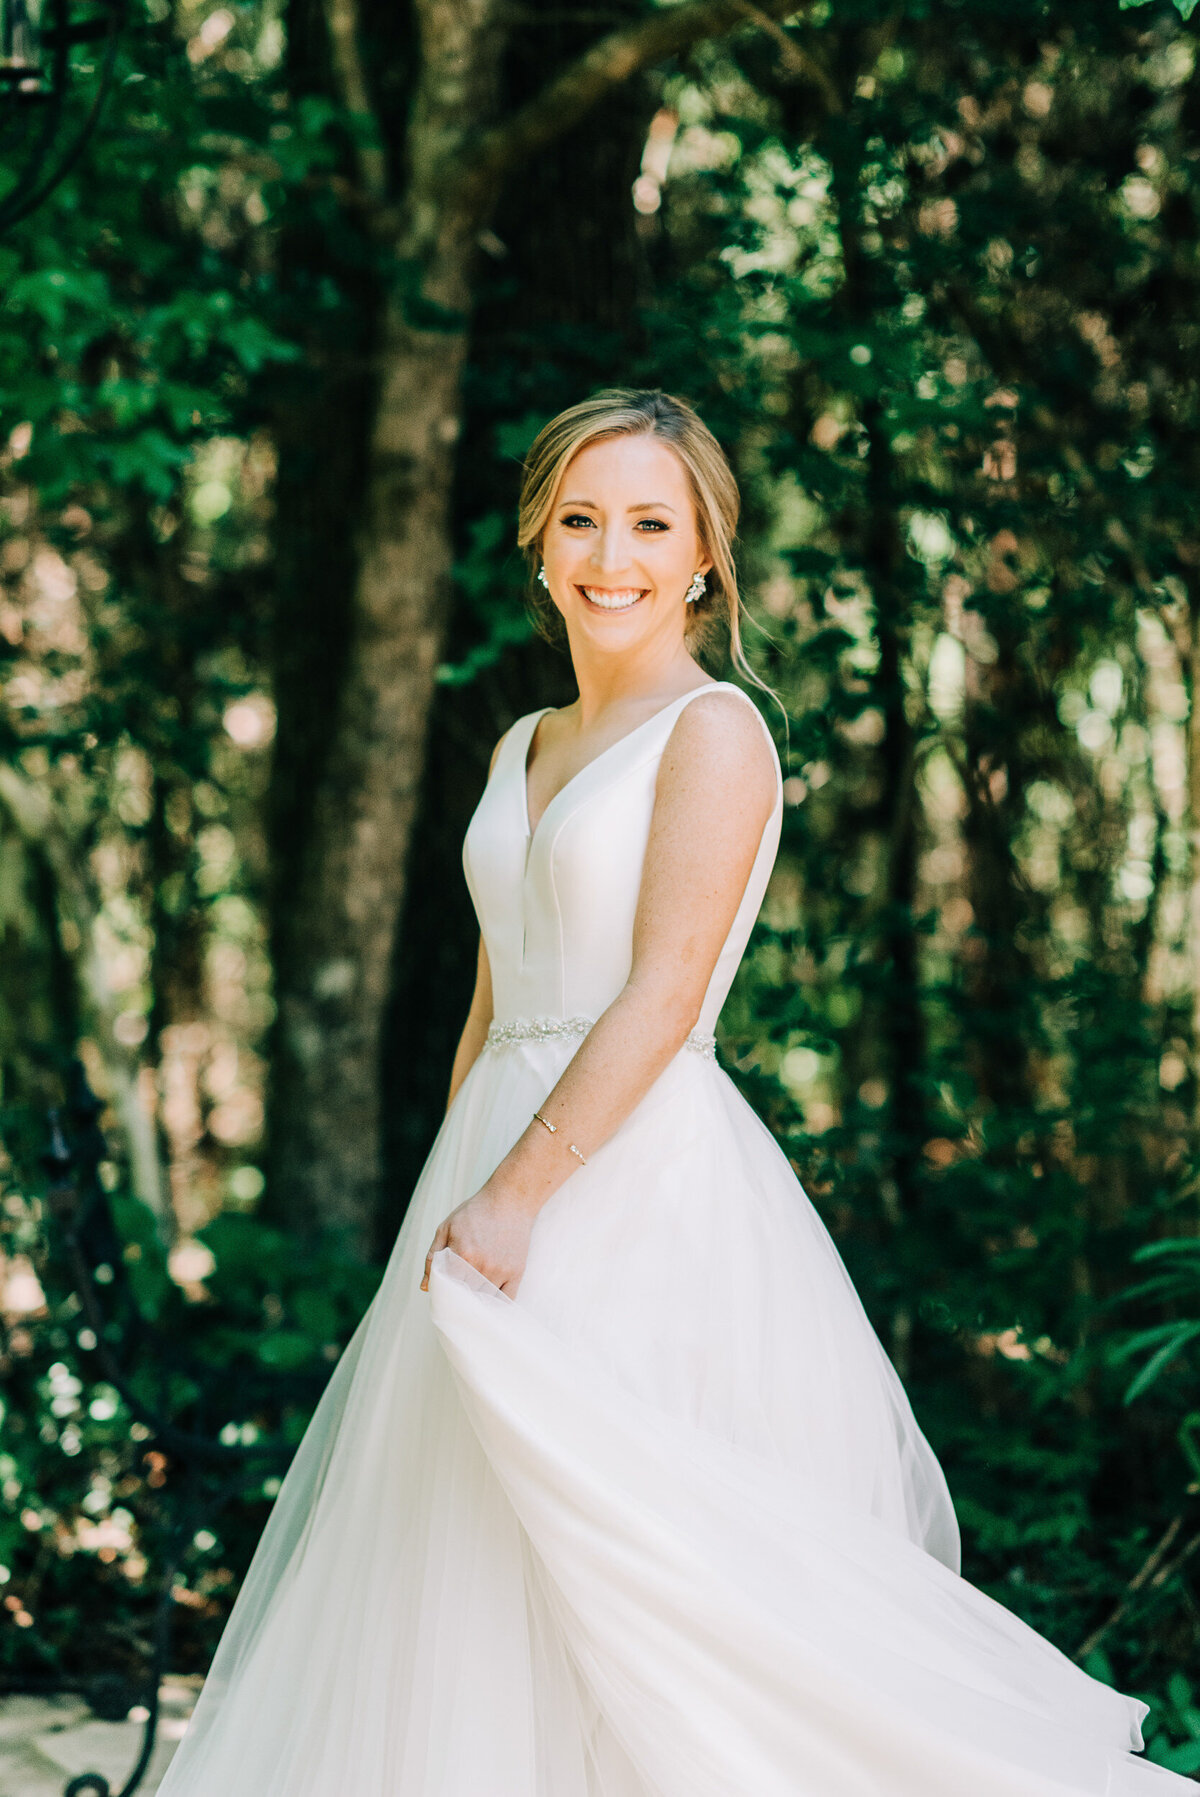 Montgomery-Bridals-Wedding-Photographer-Katelyn-20190614-0116